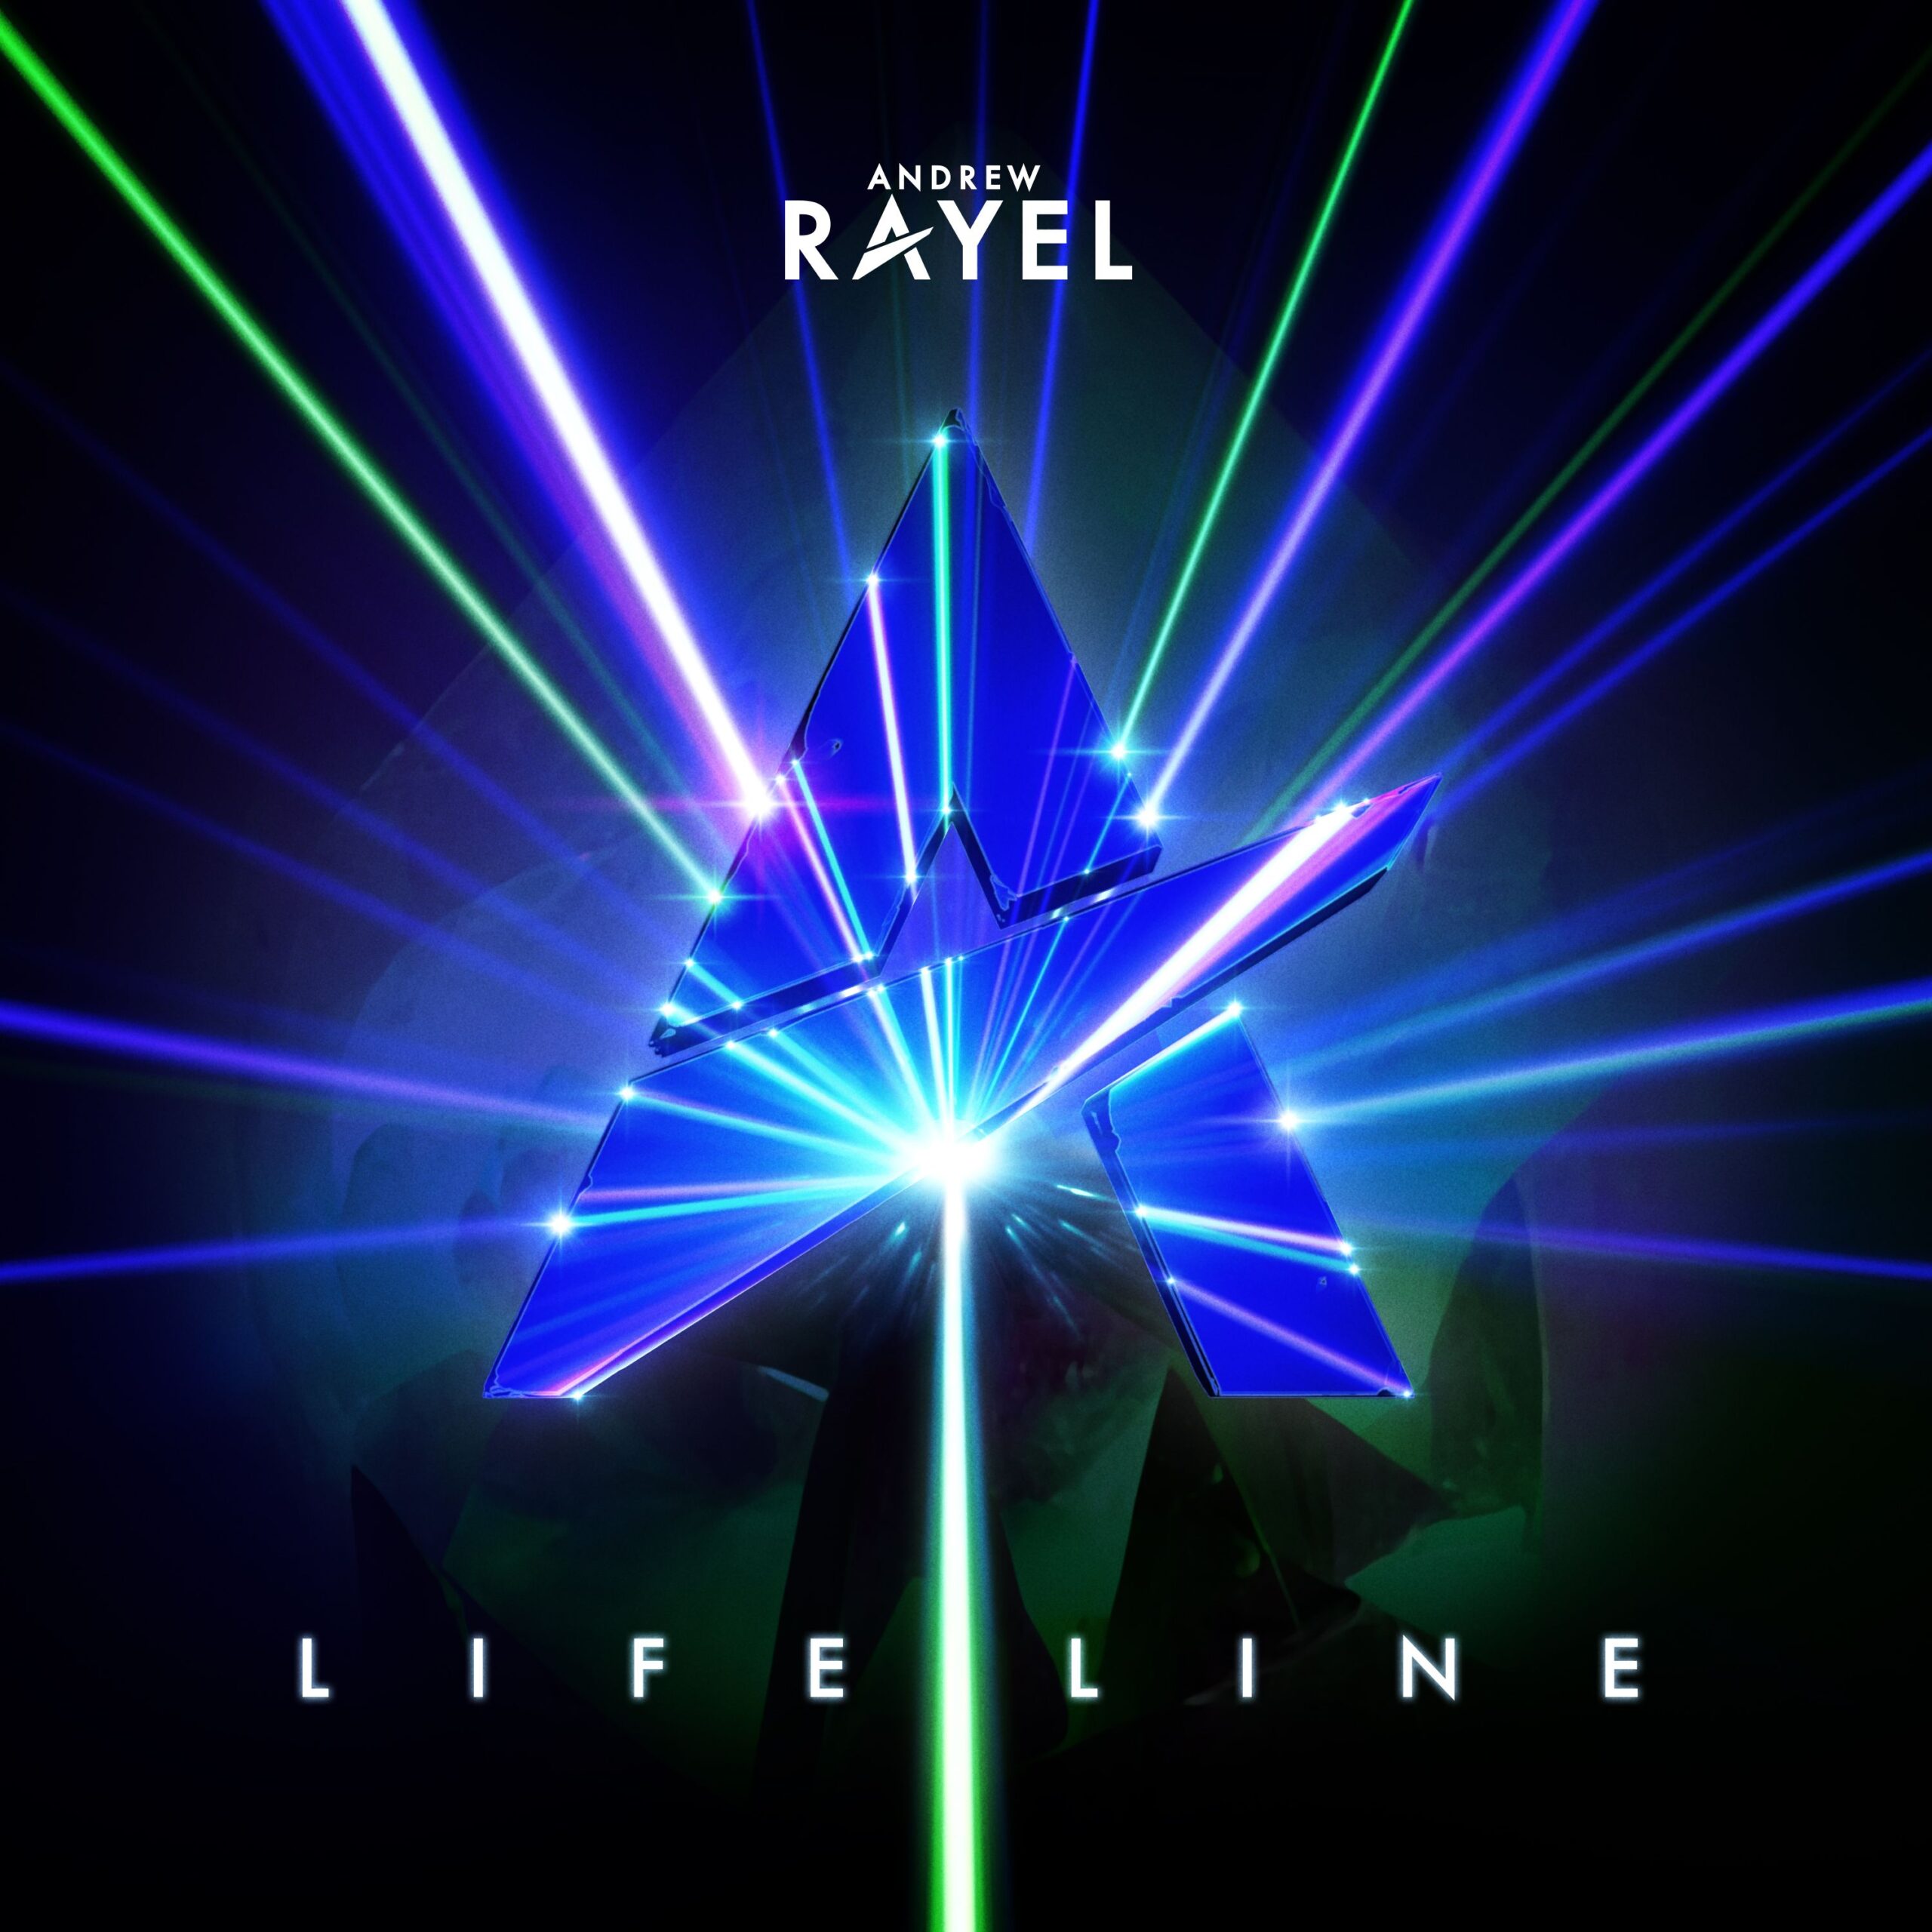 Andrew Rayel presents Lifeline on Armada Music